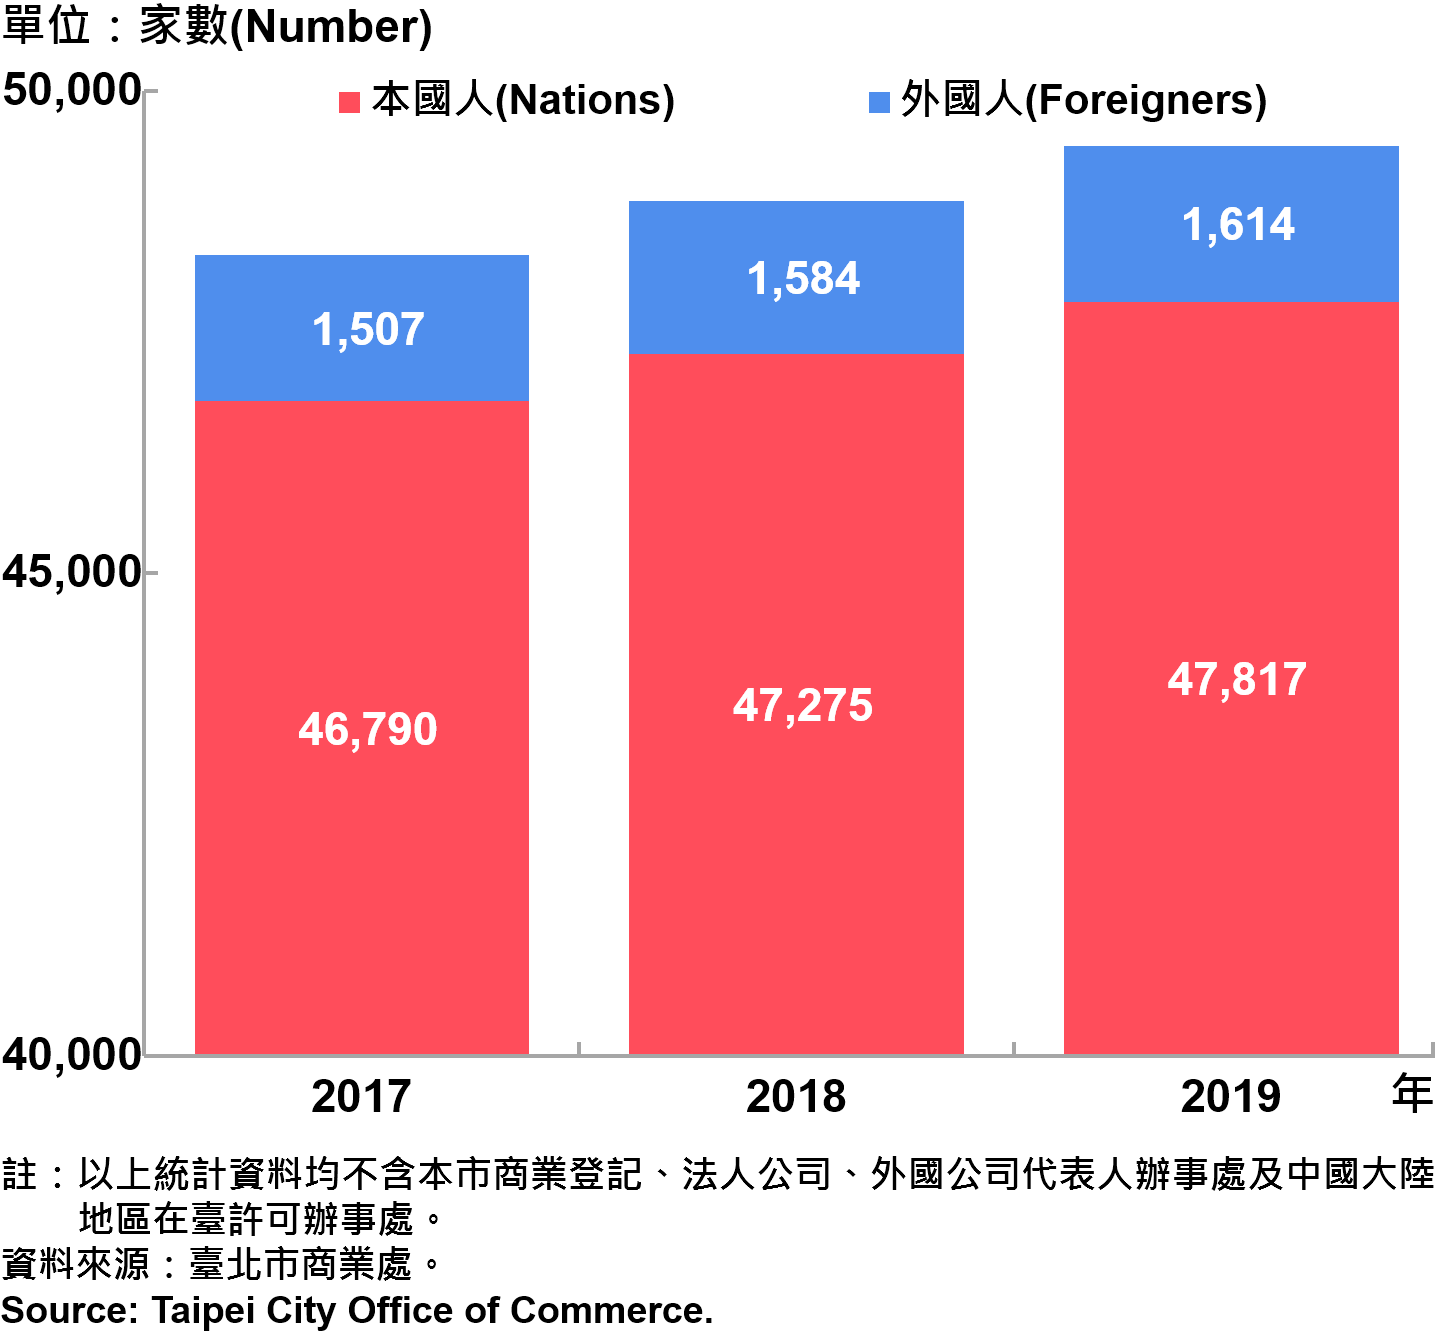 臺北市新創公司青創負責人為本國人與外國人分布情形—依現存家數—2019 Responsible Person of Newly Registered Companies In Taipei City by Nationality - Number of Current —2019